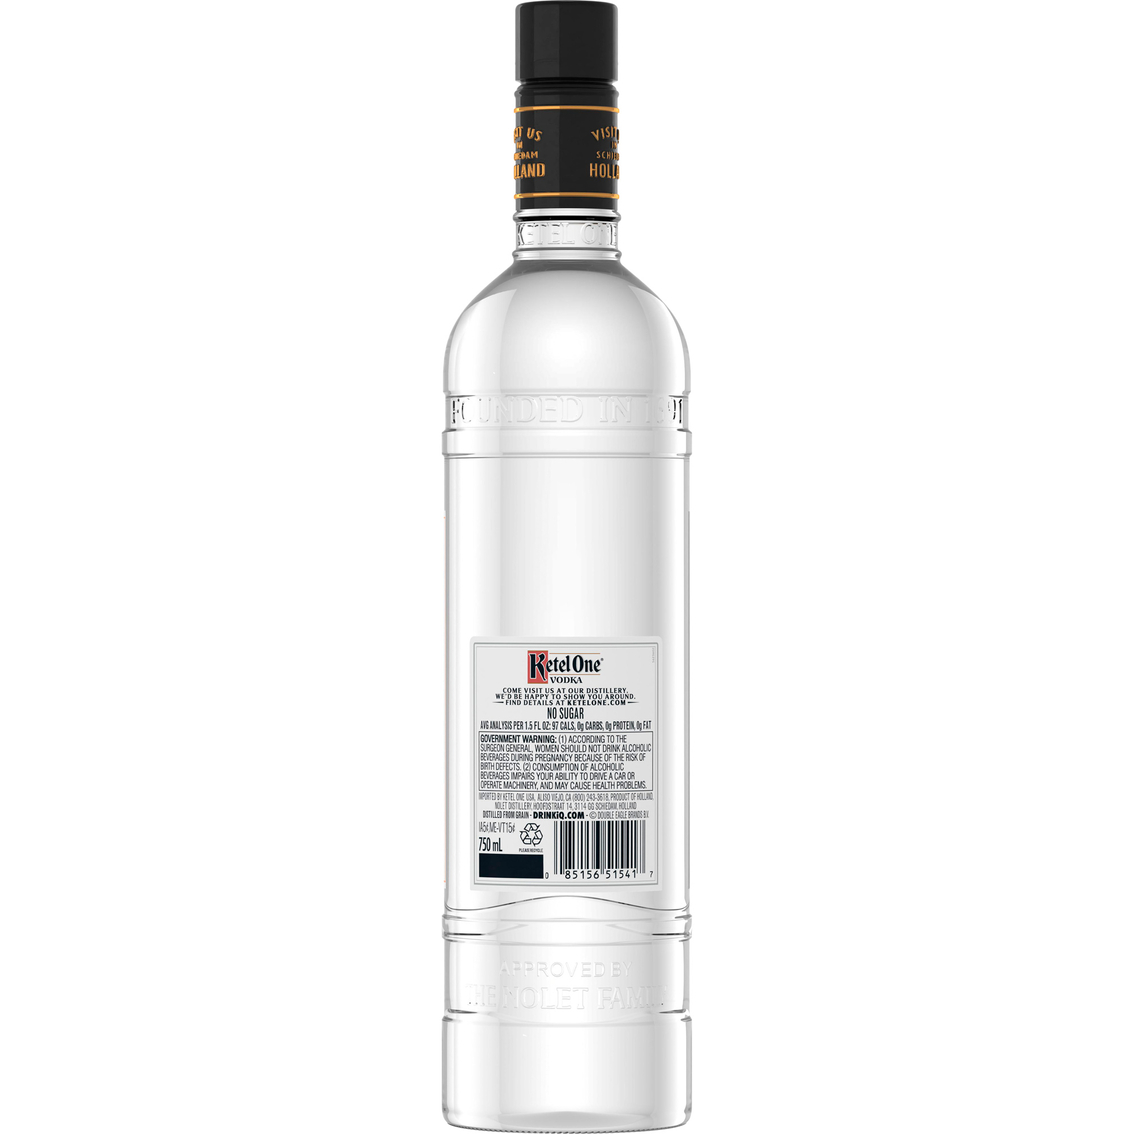 Ketel One Vodka 750ml - Image 2 of 2